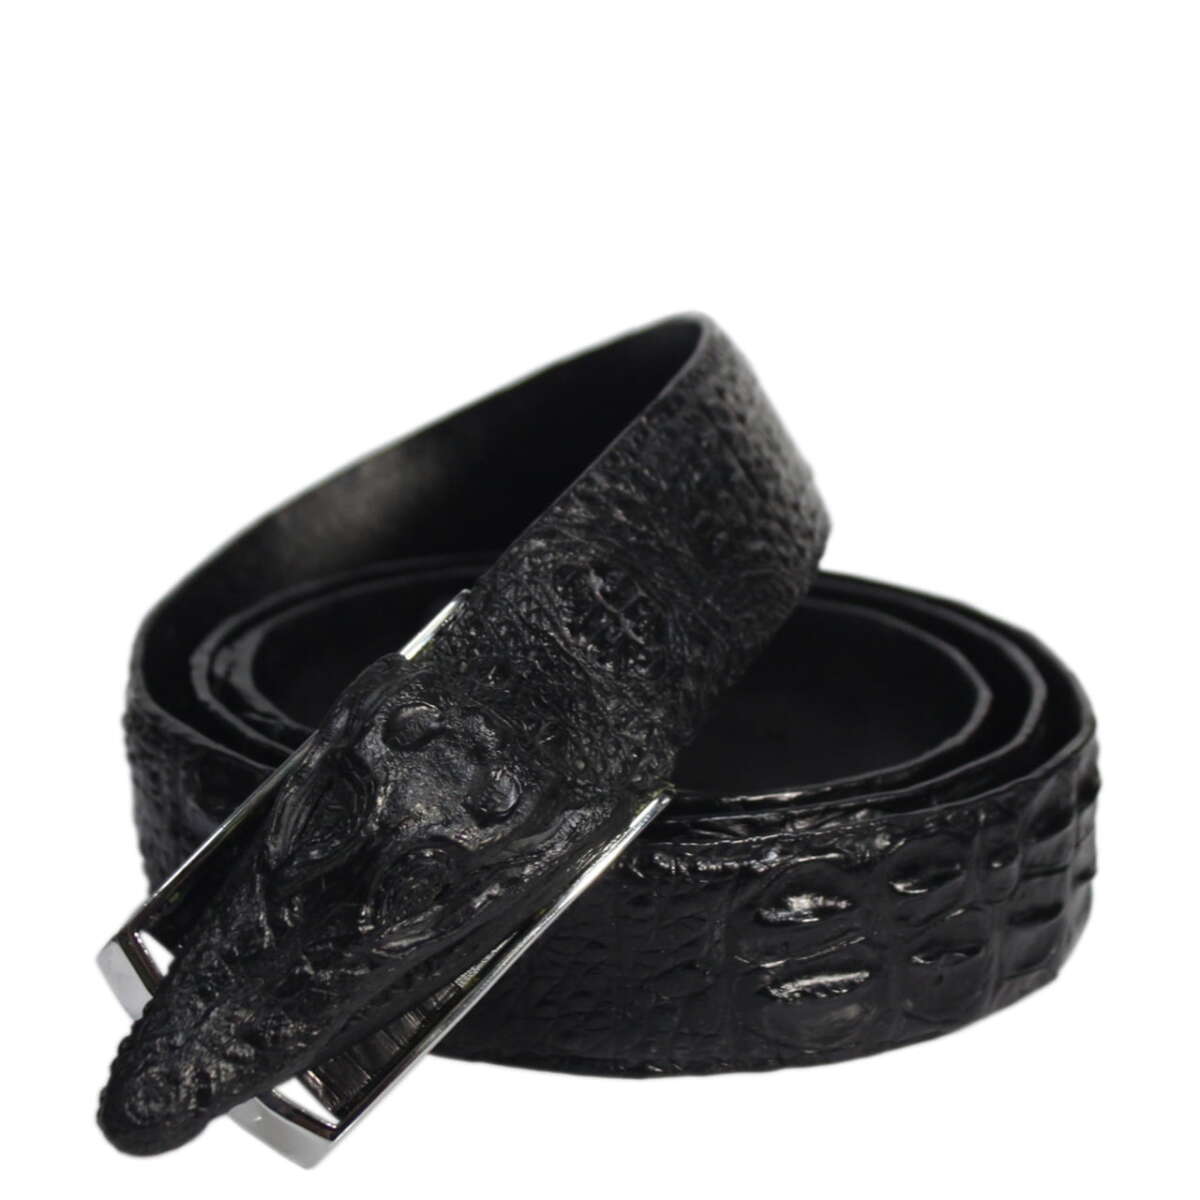 Crocodile leather belt S613a